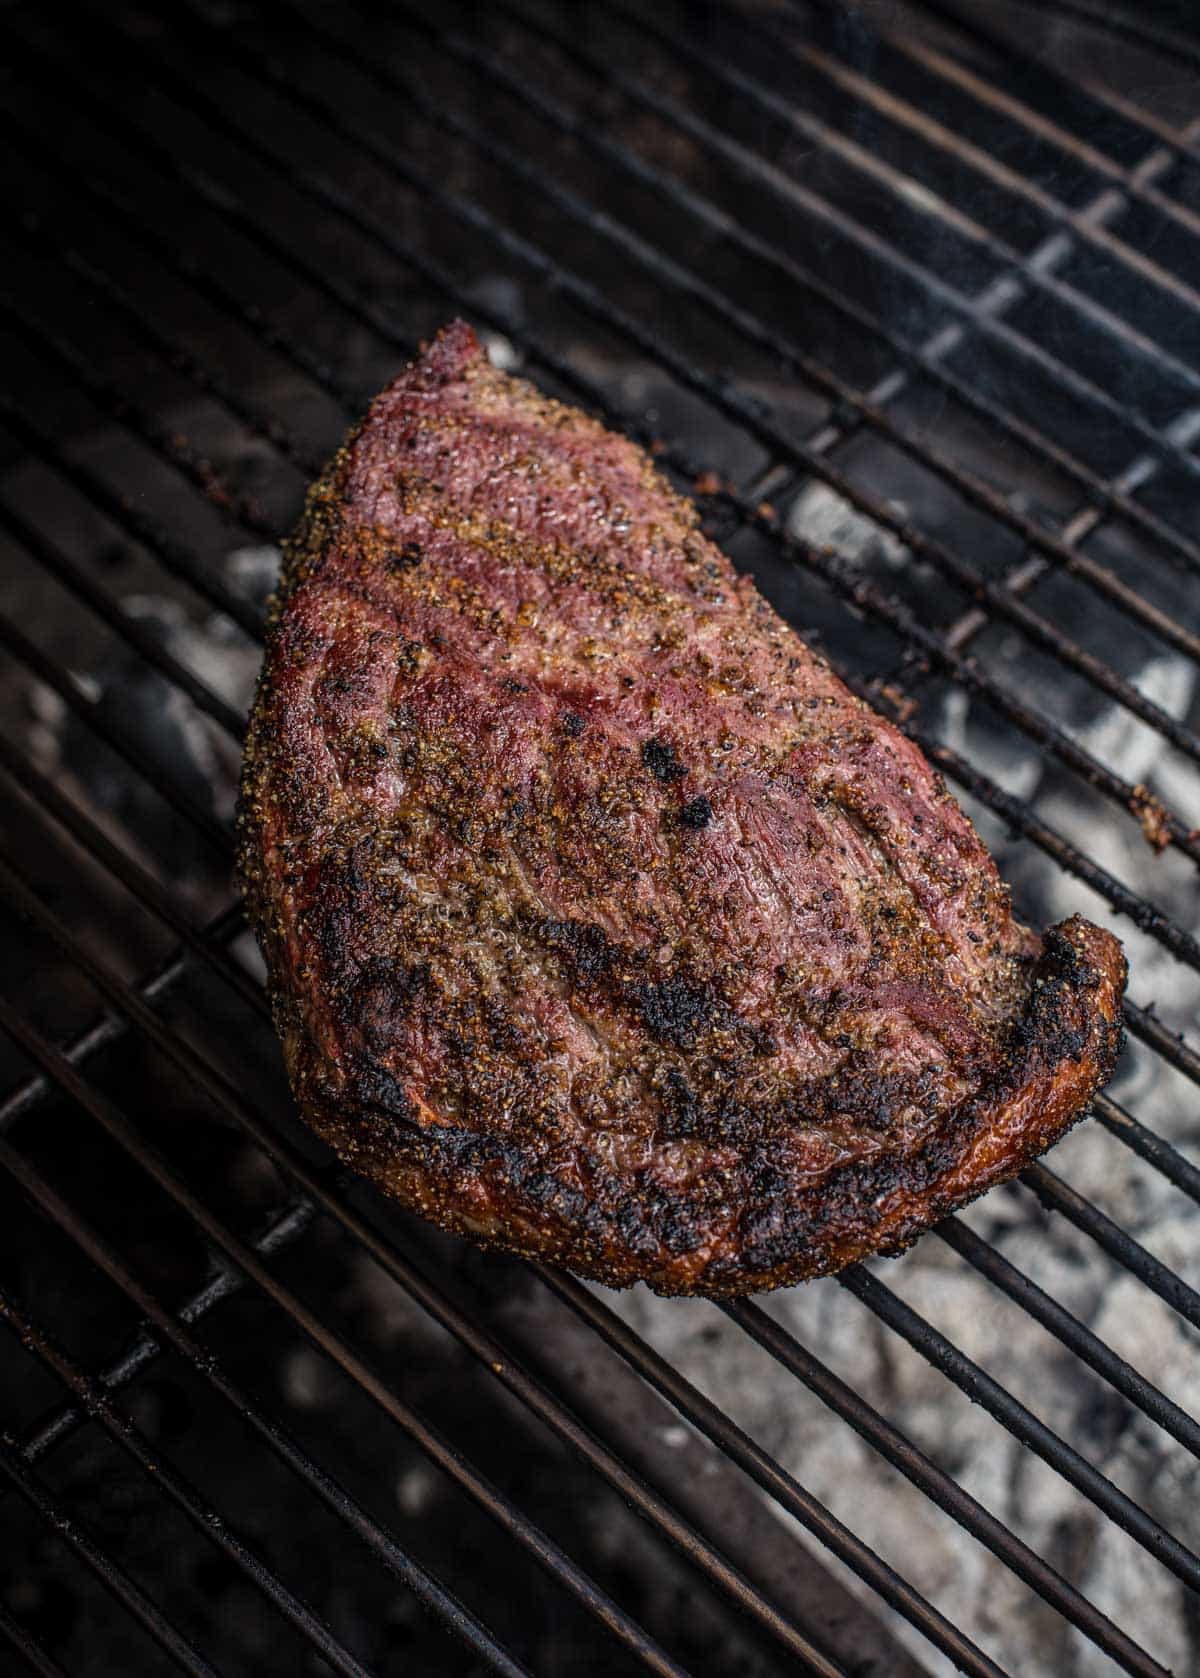 A sirloin steak on the grill